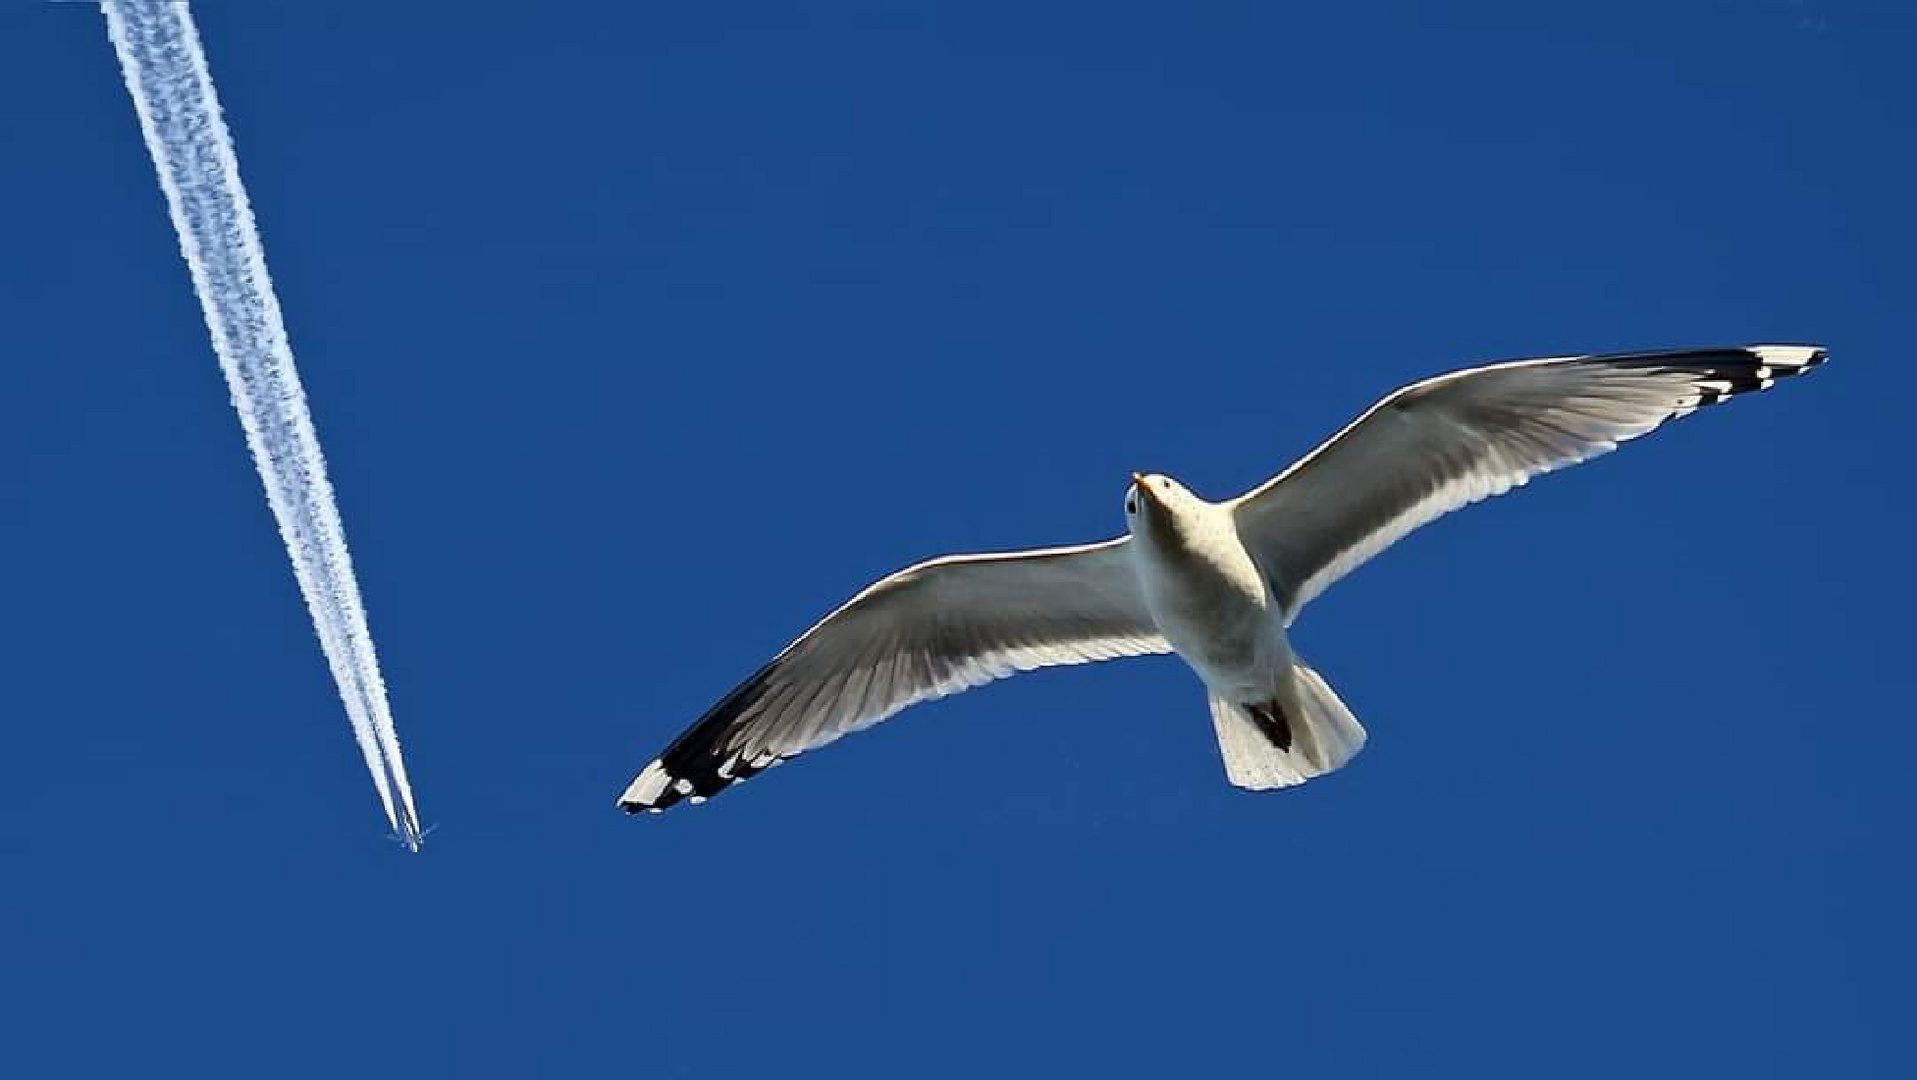 Seagull vs Airplane 